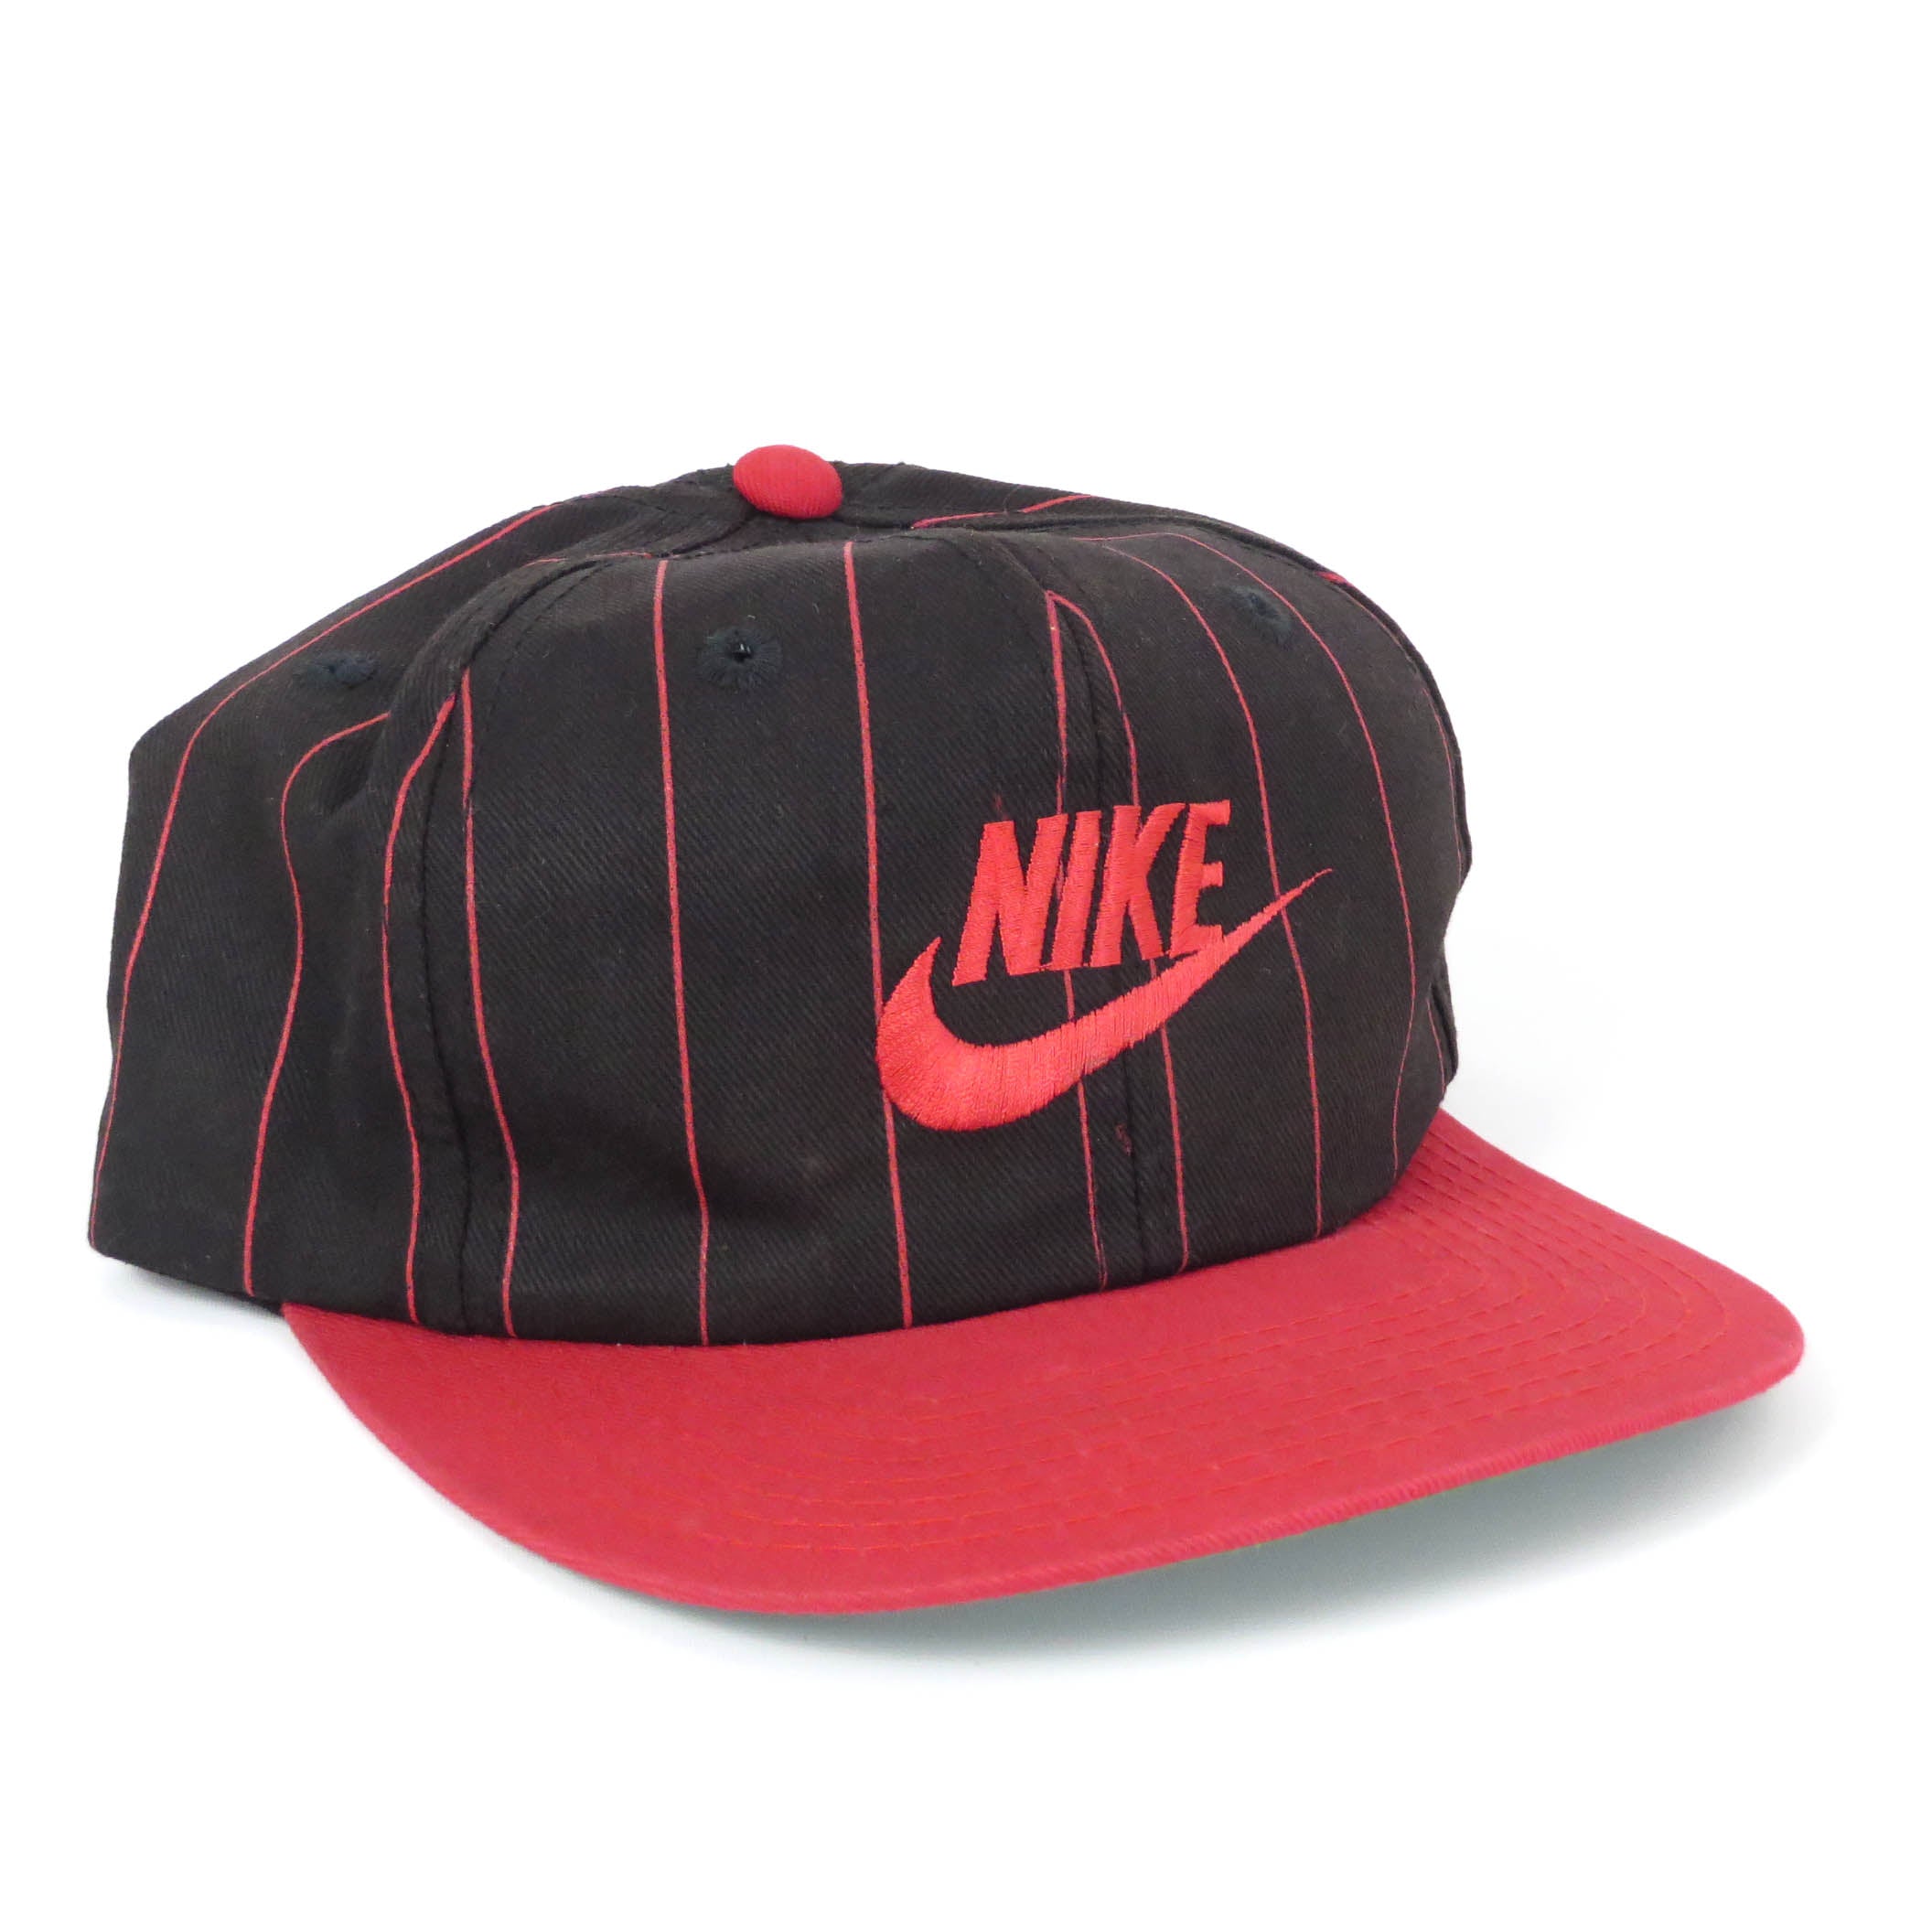 Vintage Nike Two-Tone Pinstripe Snapback Hat